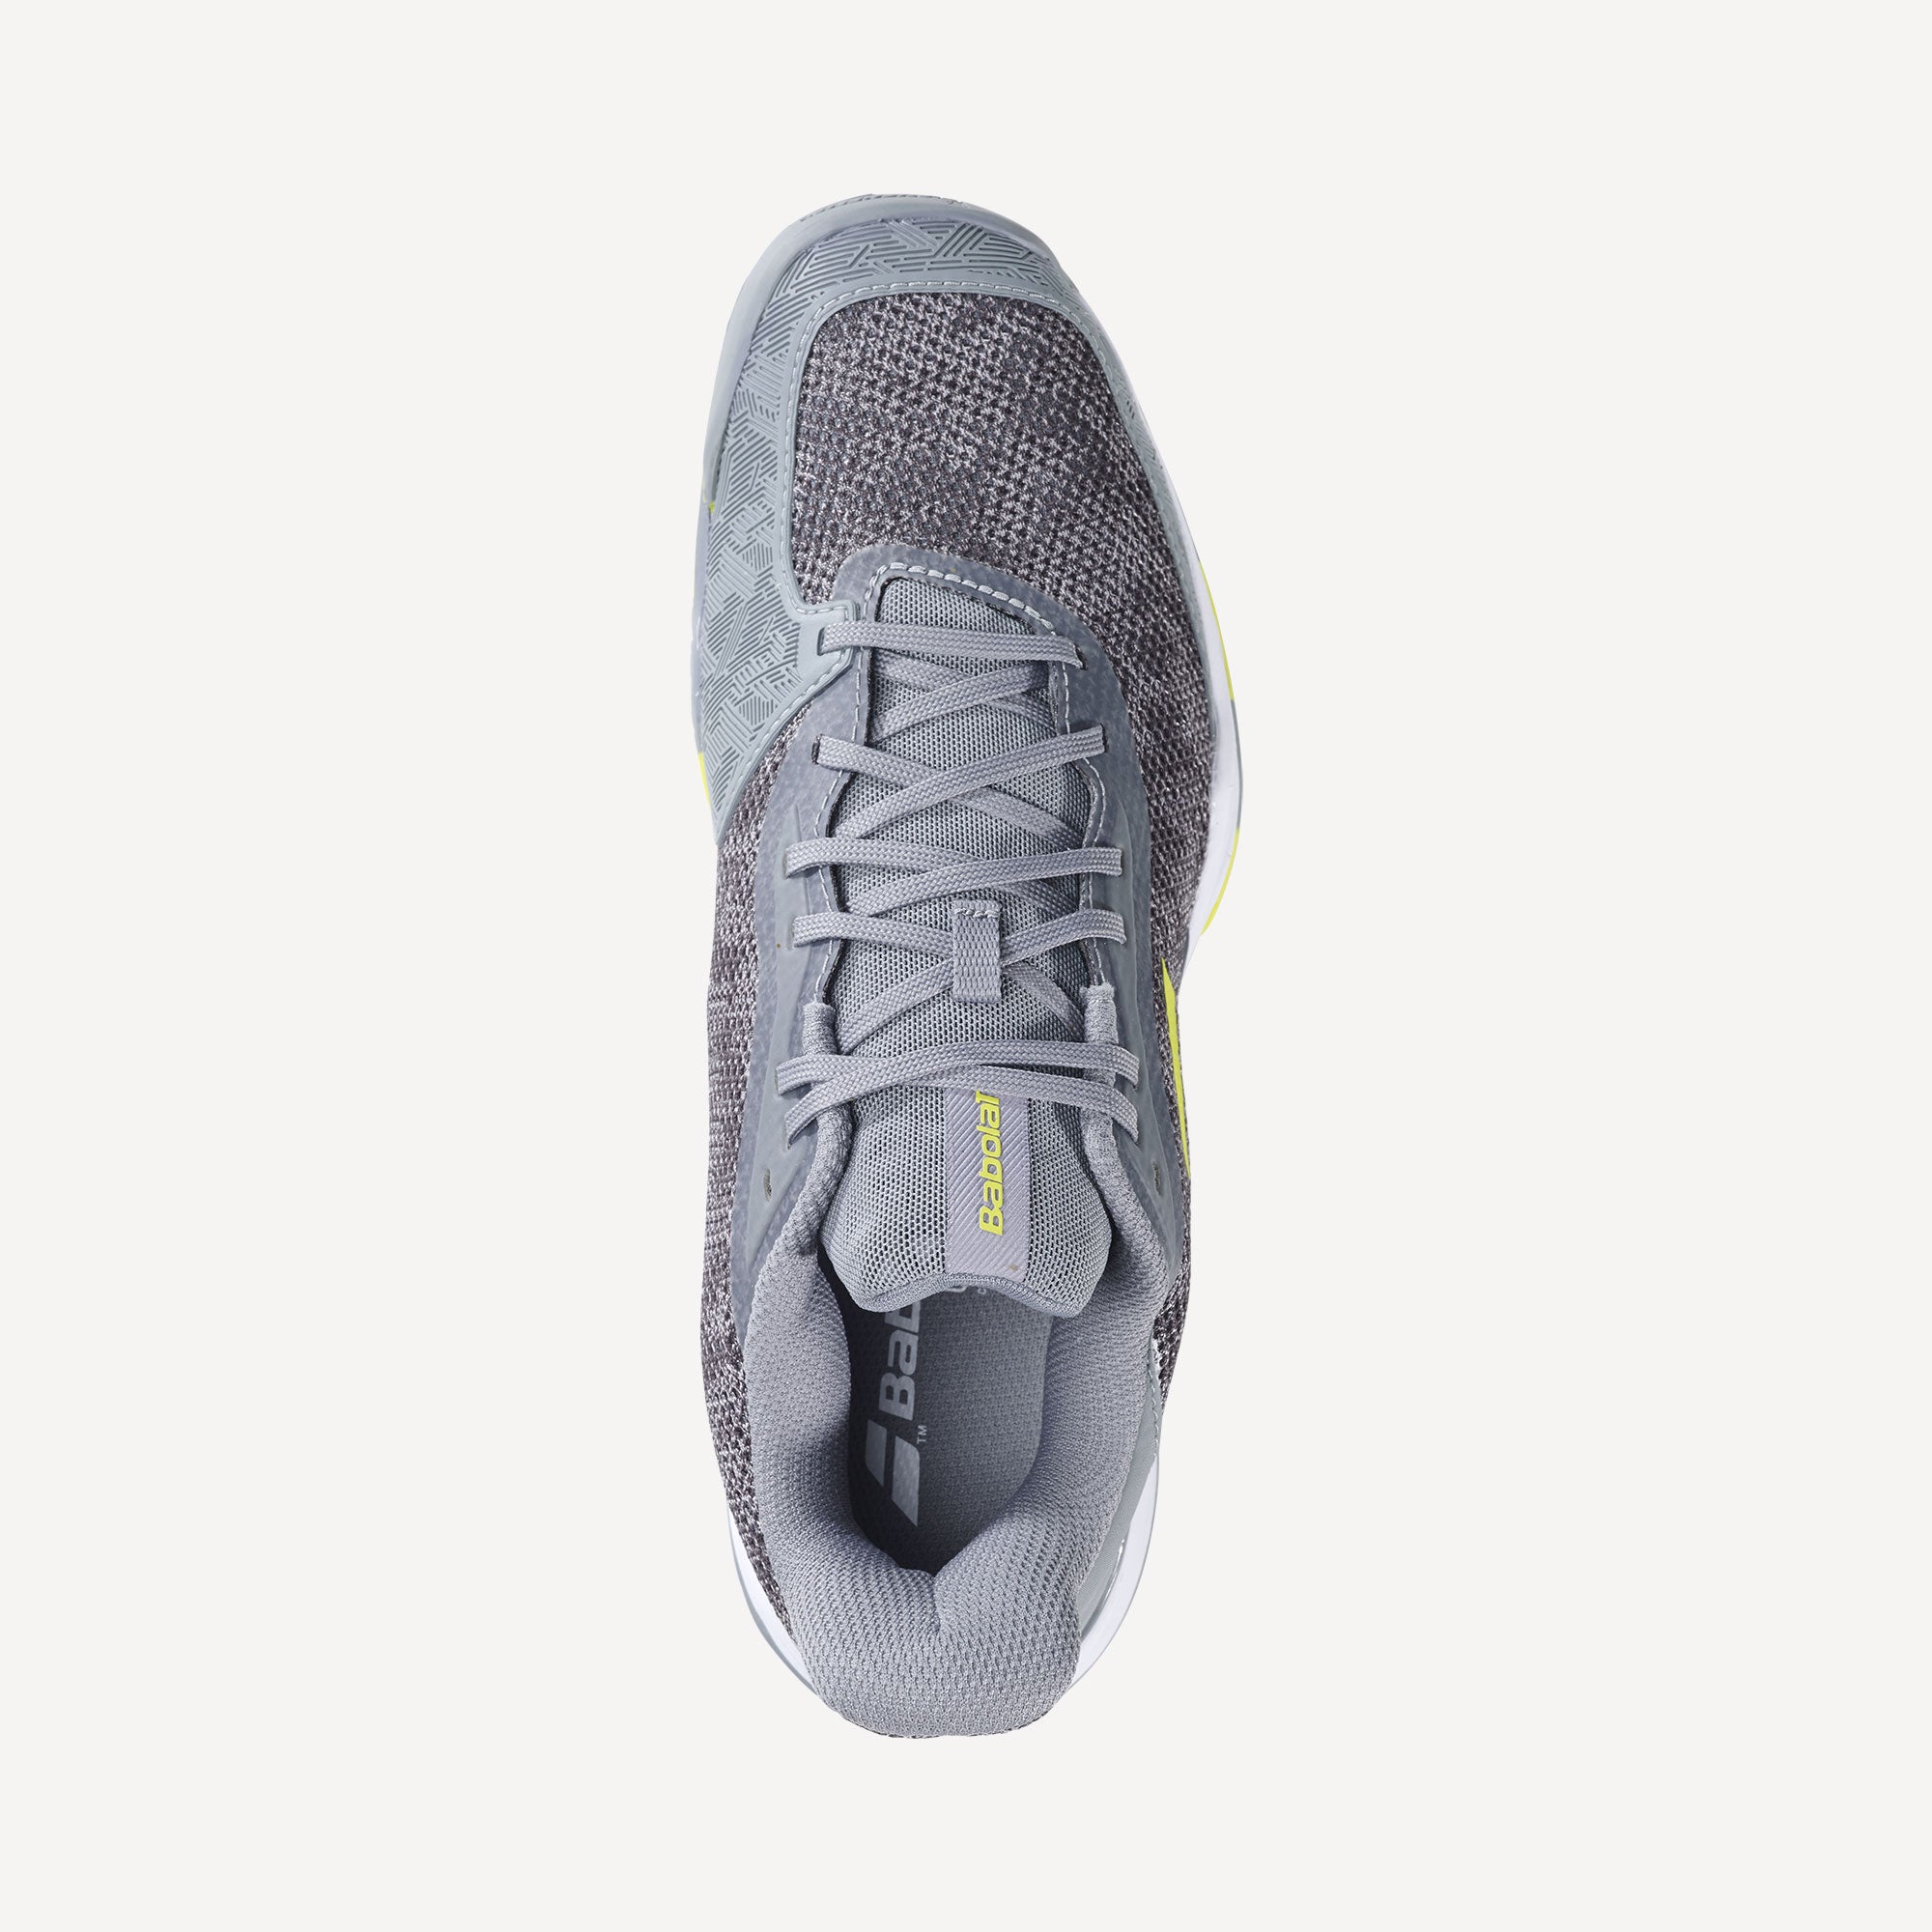 Babolat Jet Tere Men's Clay Court Tennis Shoes Grey (4)